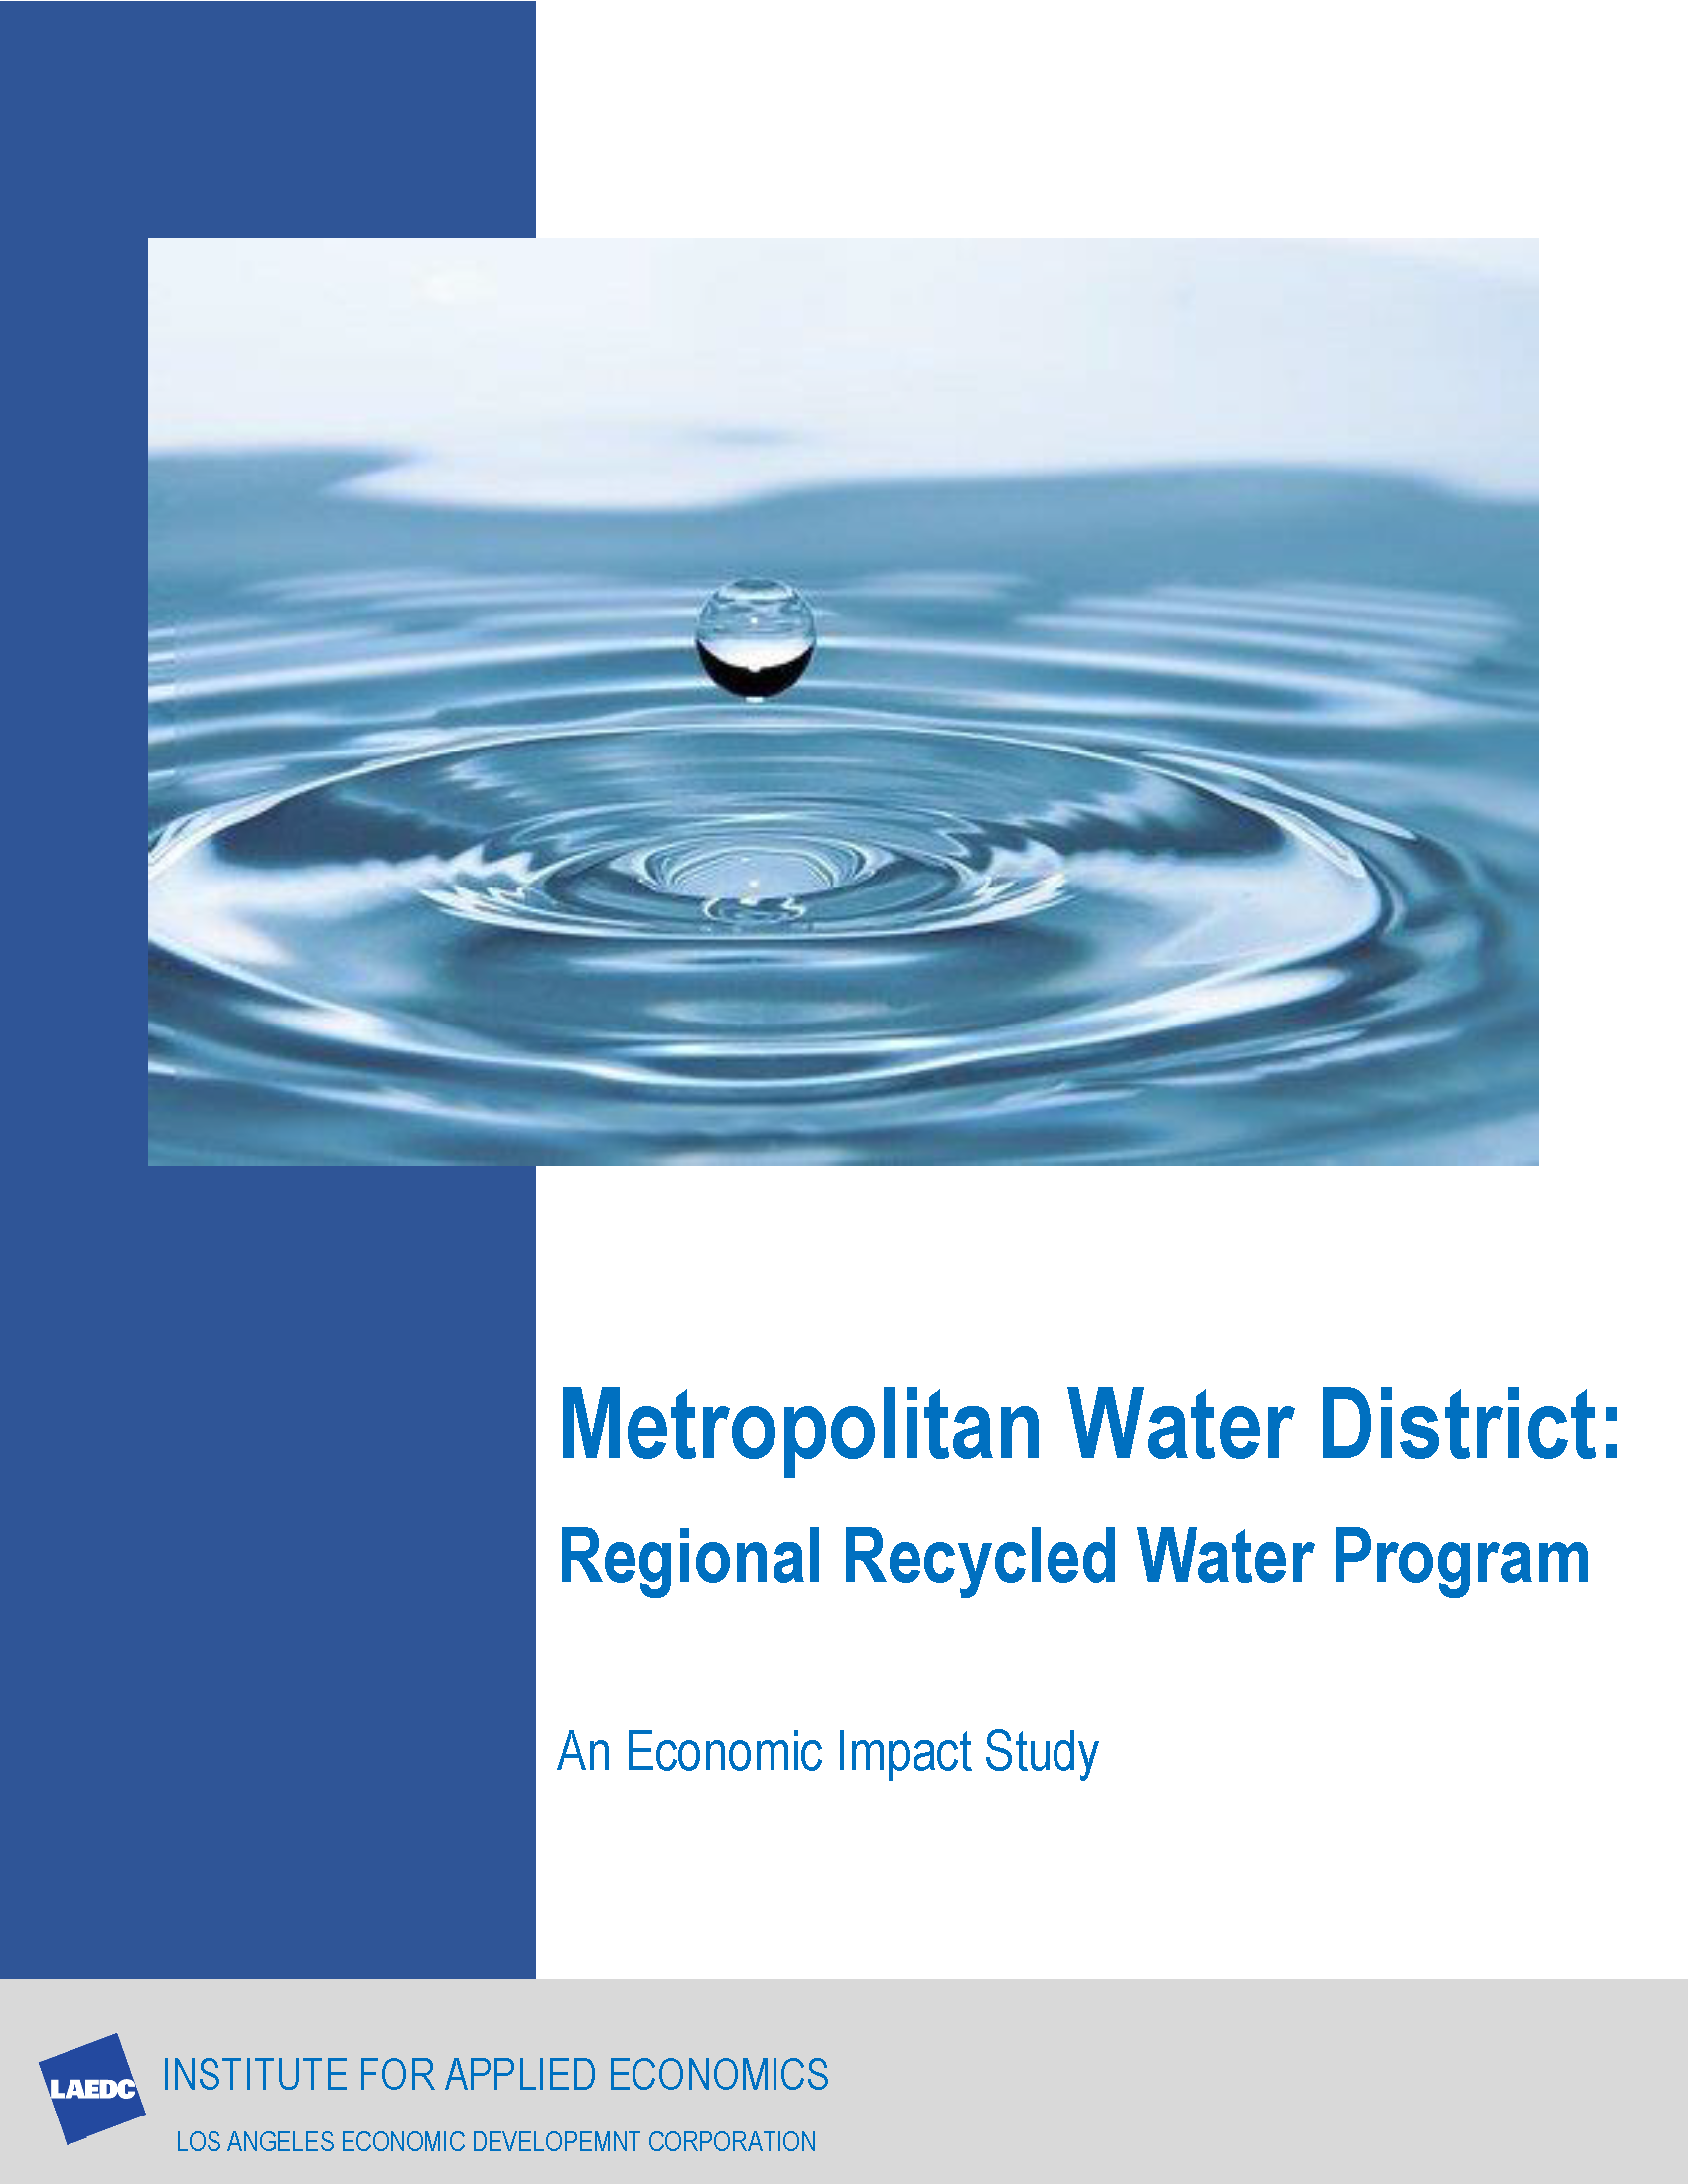 Metropolitan Water District: Regional Recycled Water Program, An Economic Impact Study